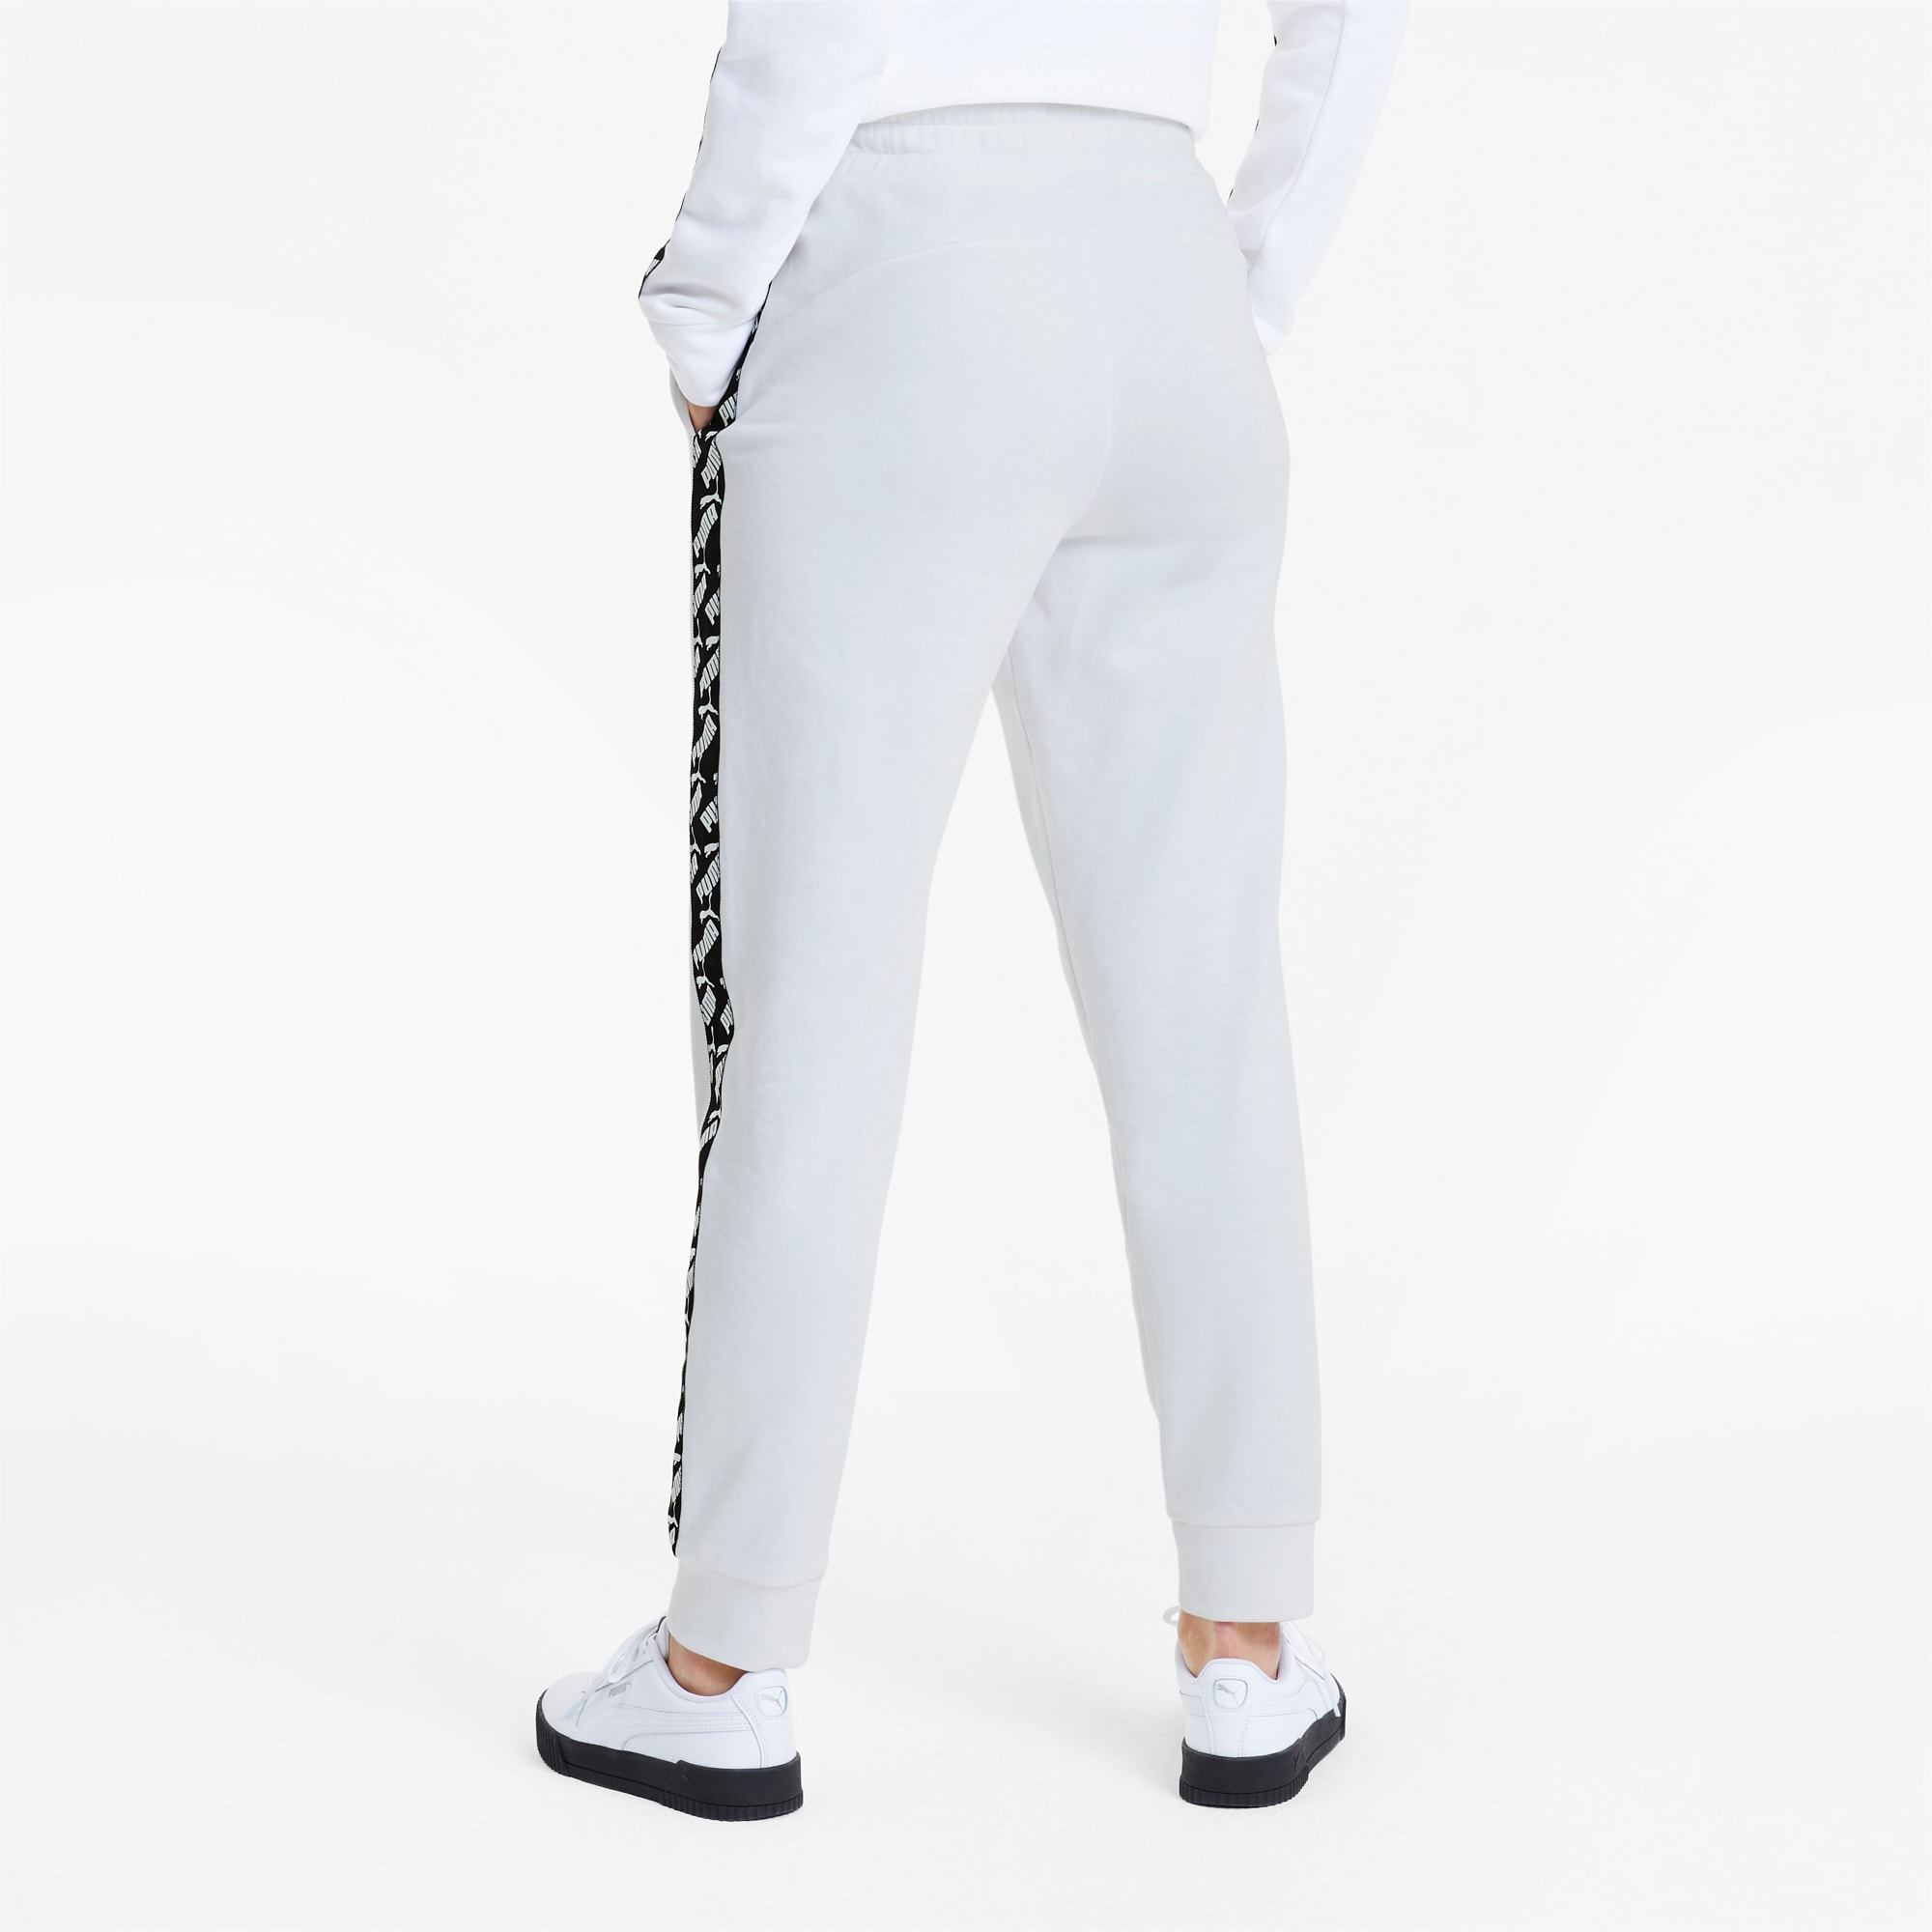 puma white track pants